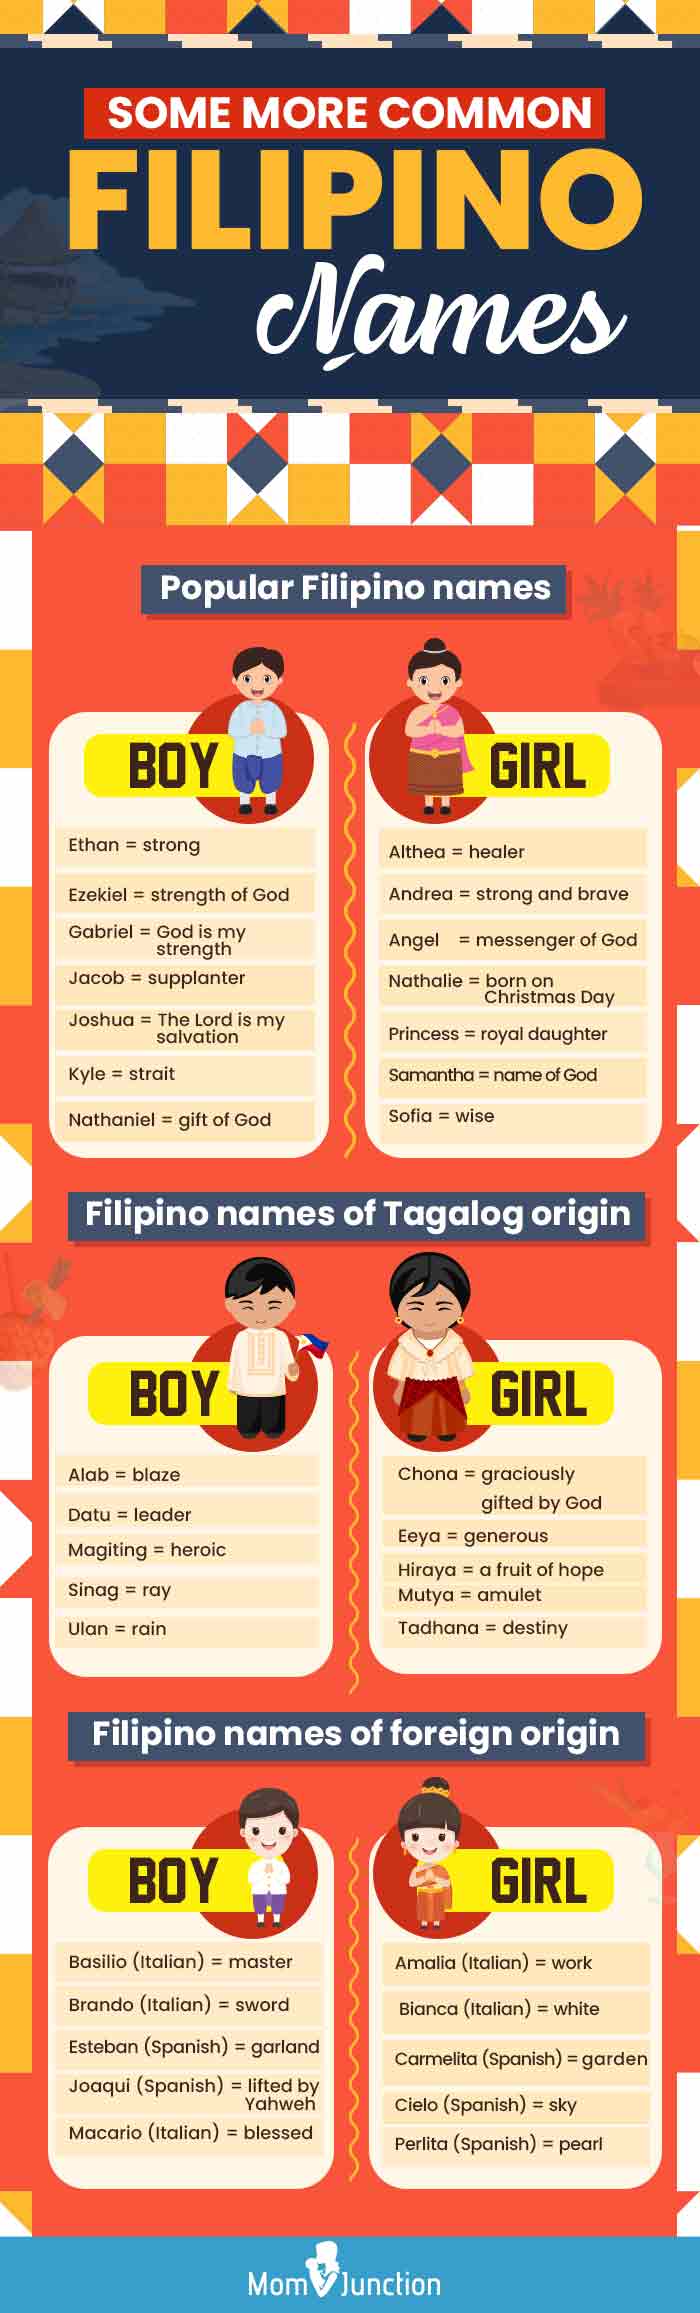 more common filipino names [infographic]